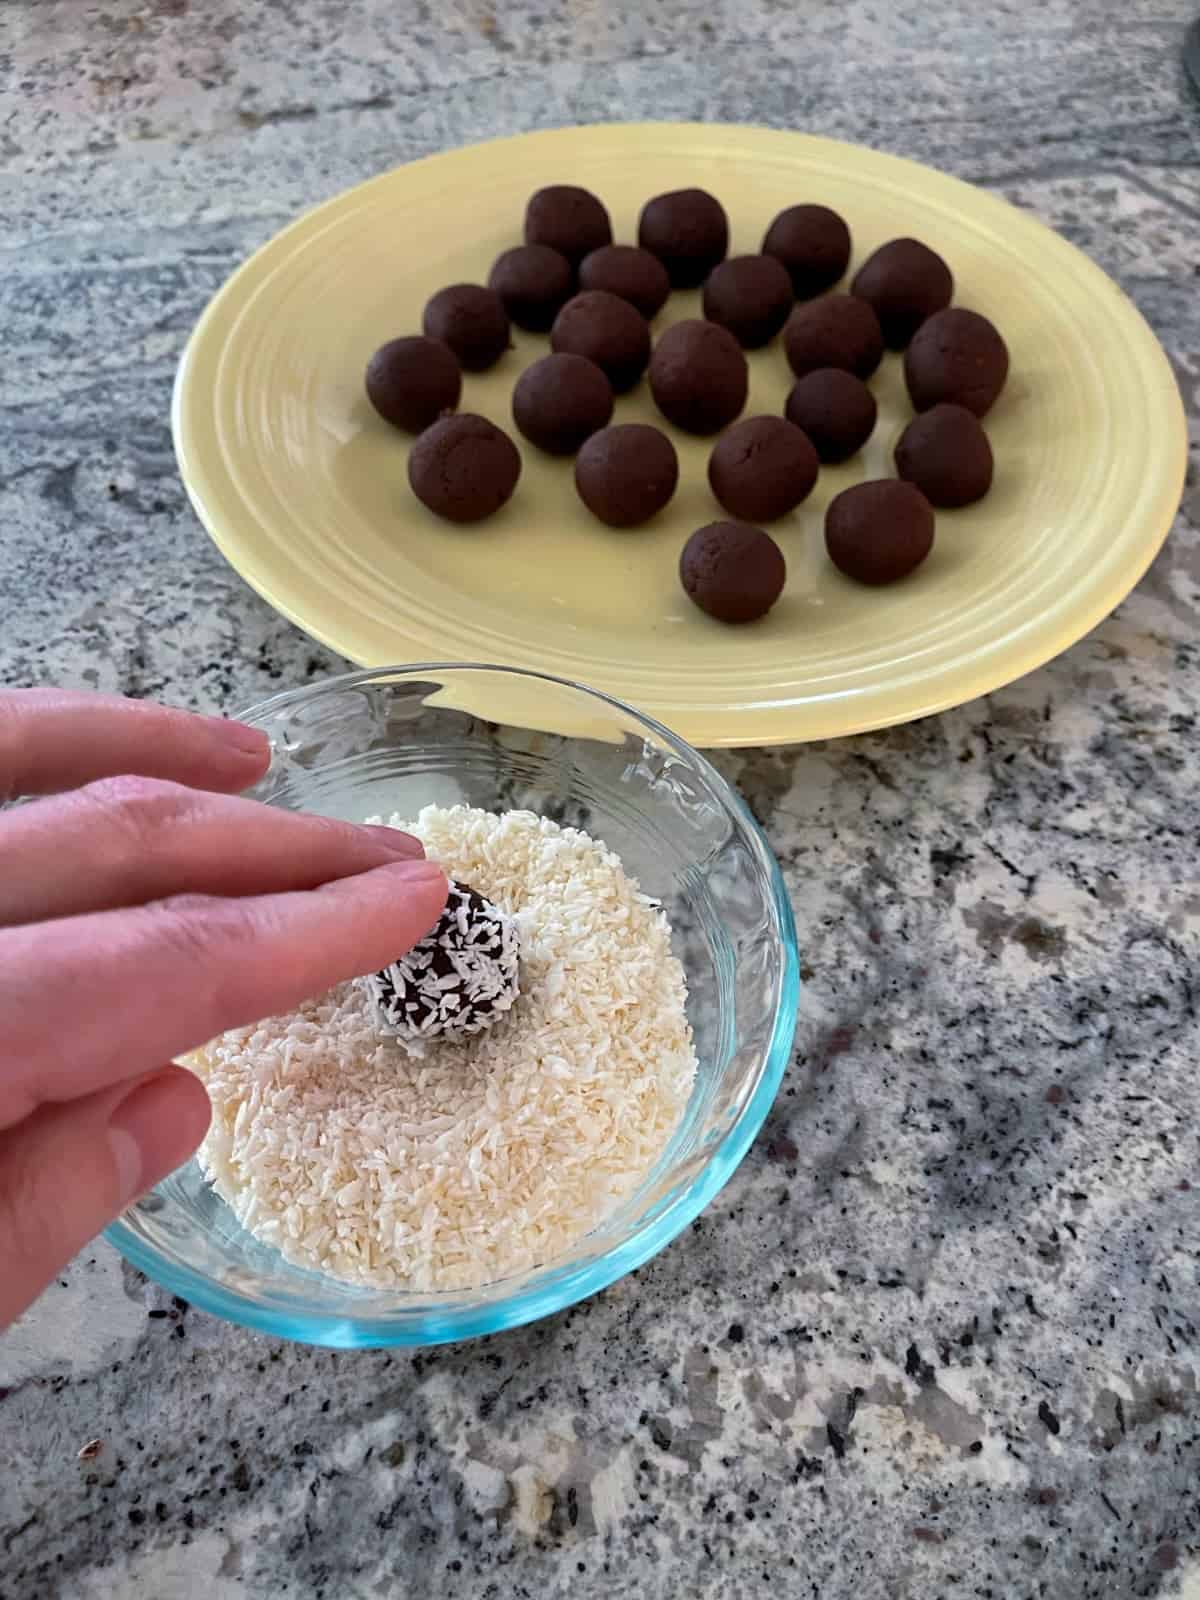 Rolling chocolate almond truffles in shredded coconut.